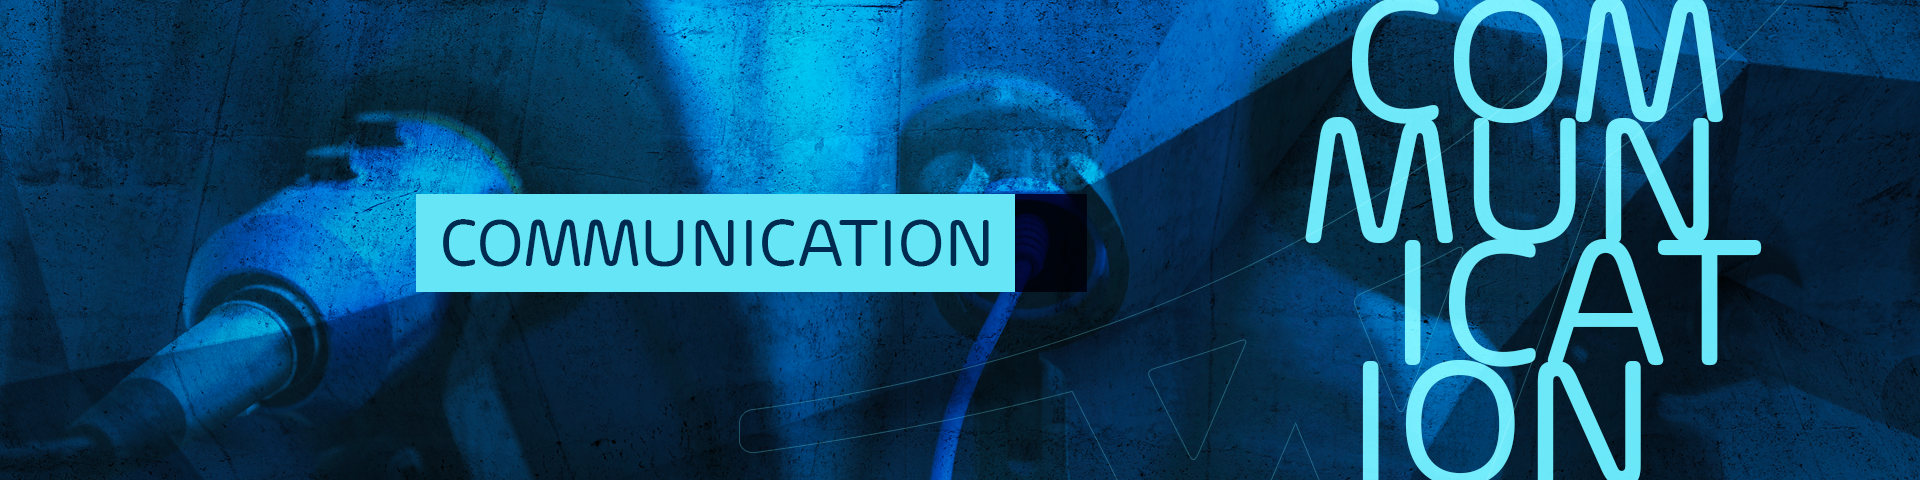 Banner da Página: Comunication